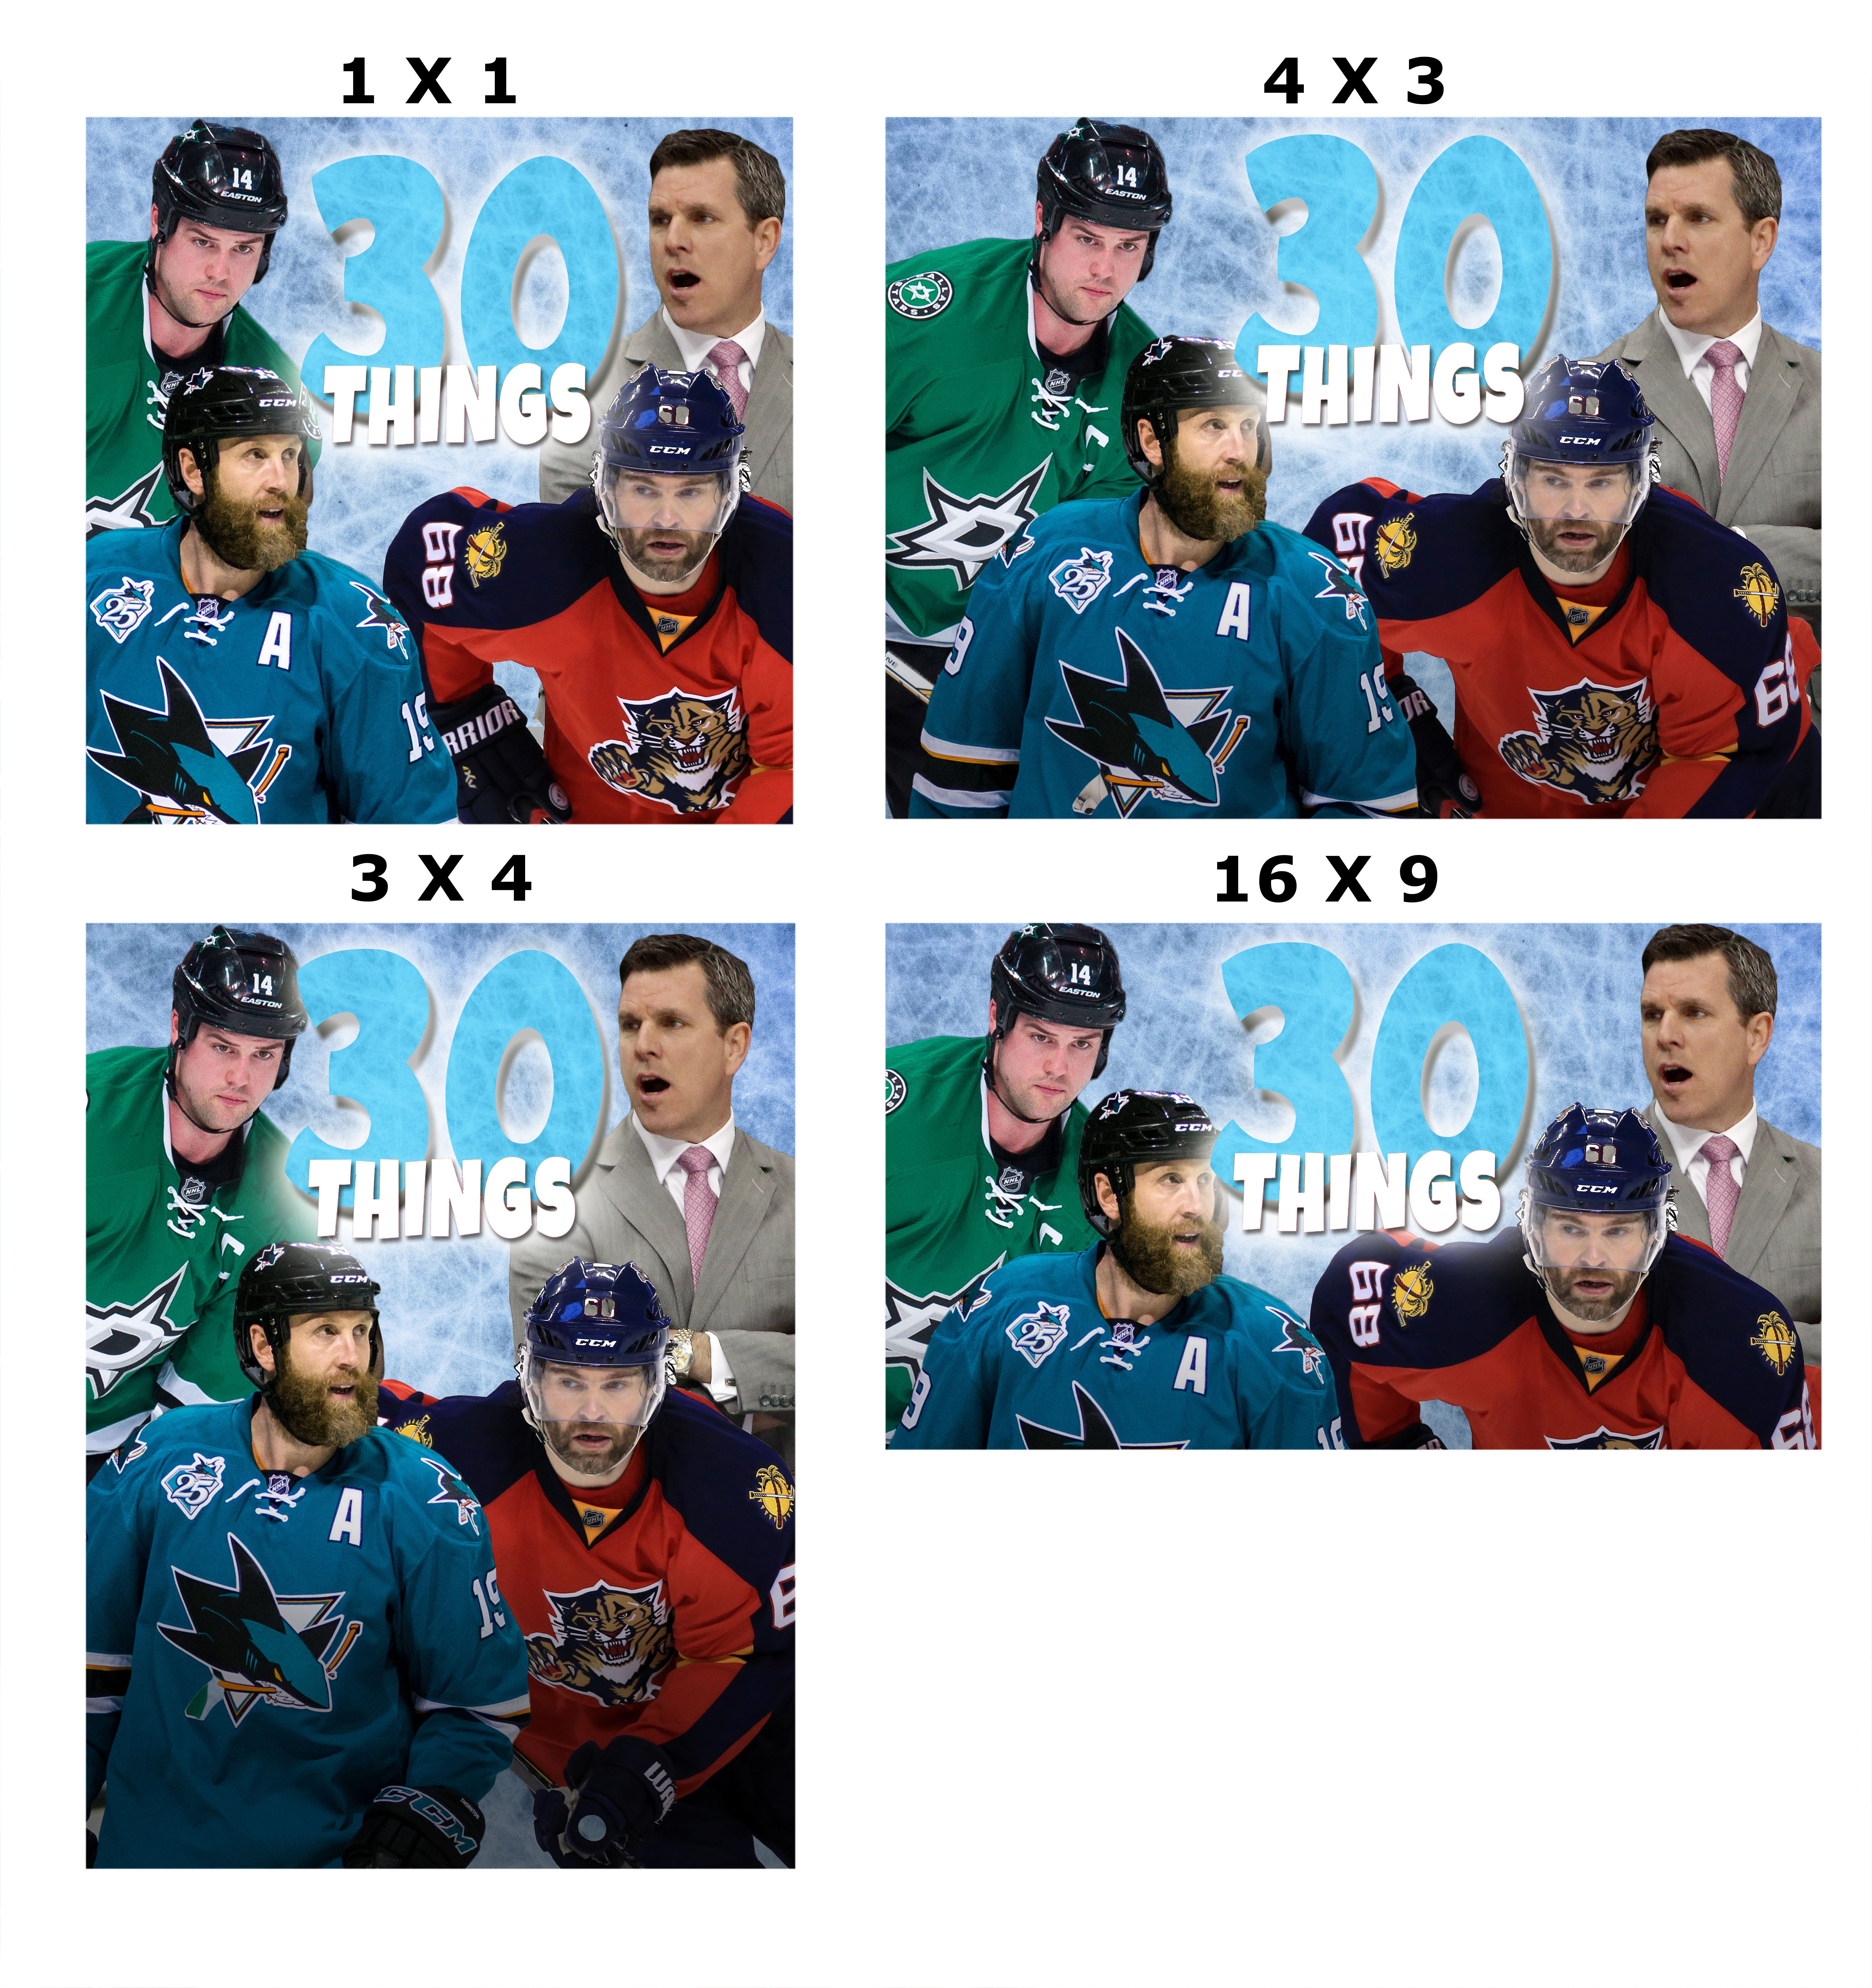 2015-16 NHL regular season